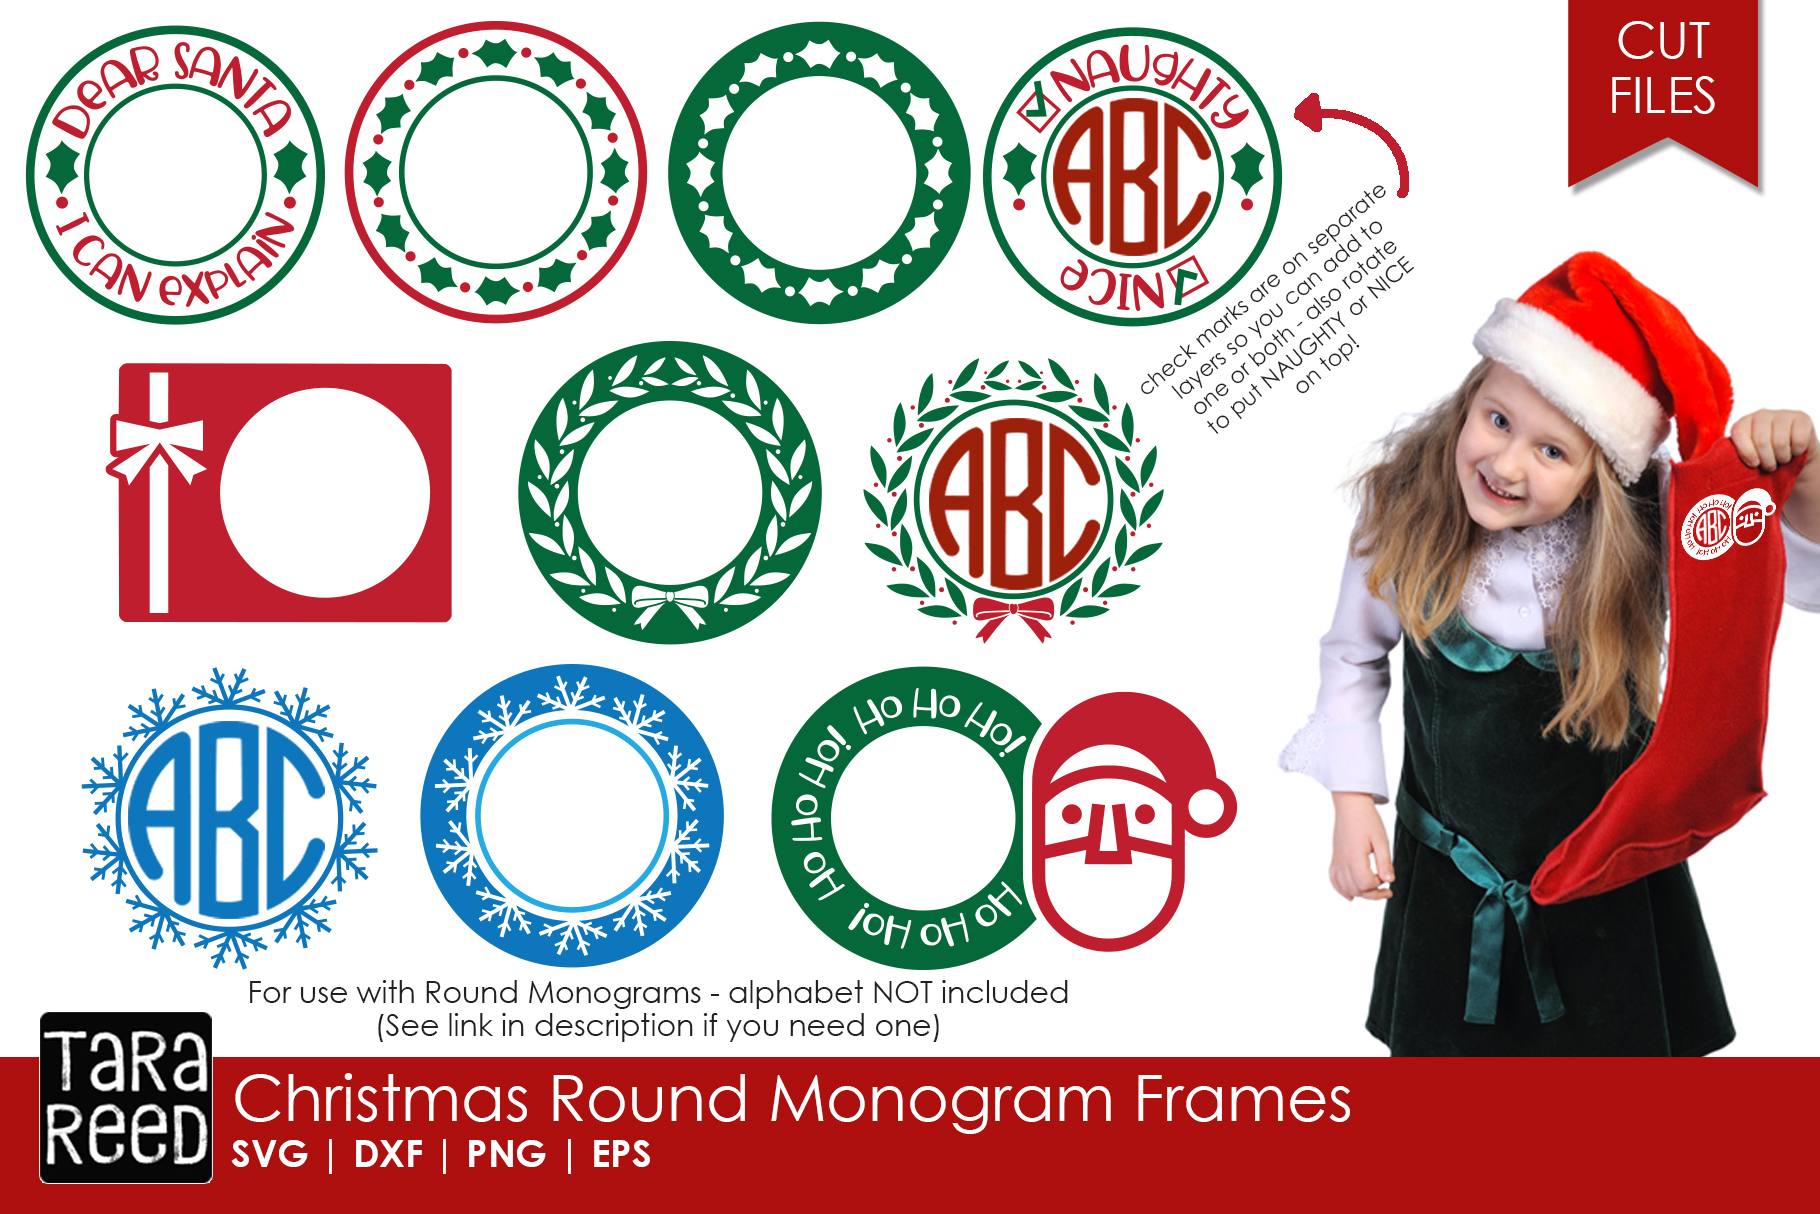 Download Christmas Round Monogram Frames - SVG & Cut Files for Crafts